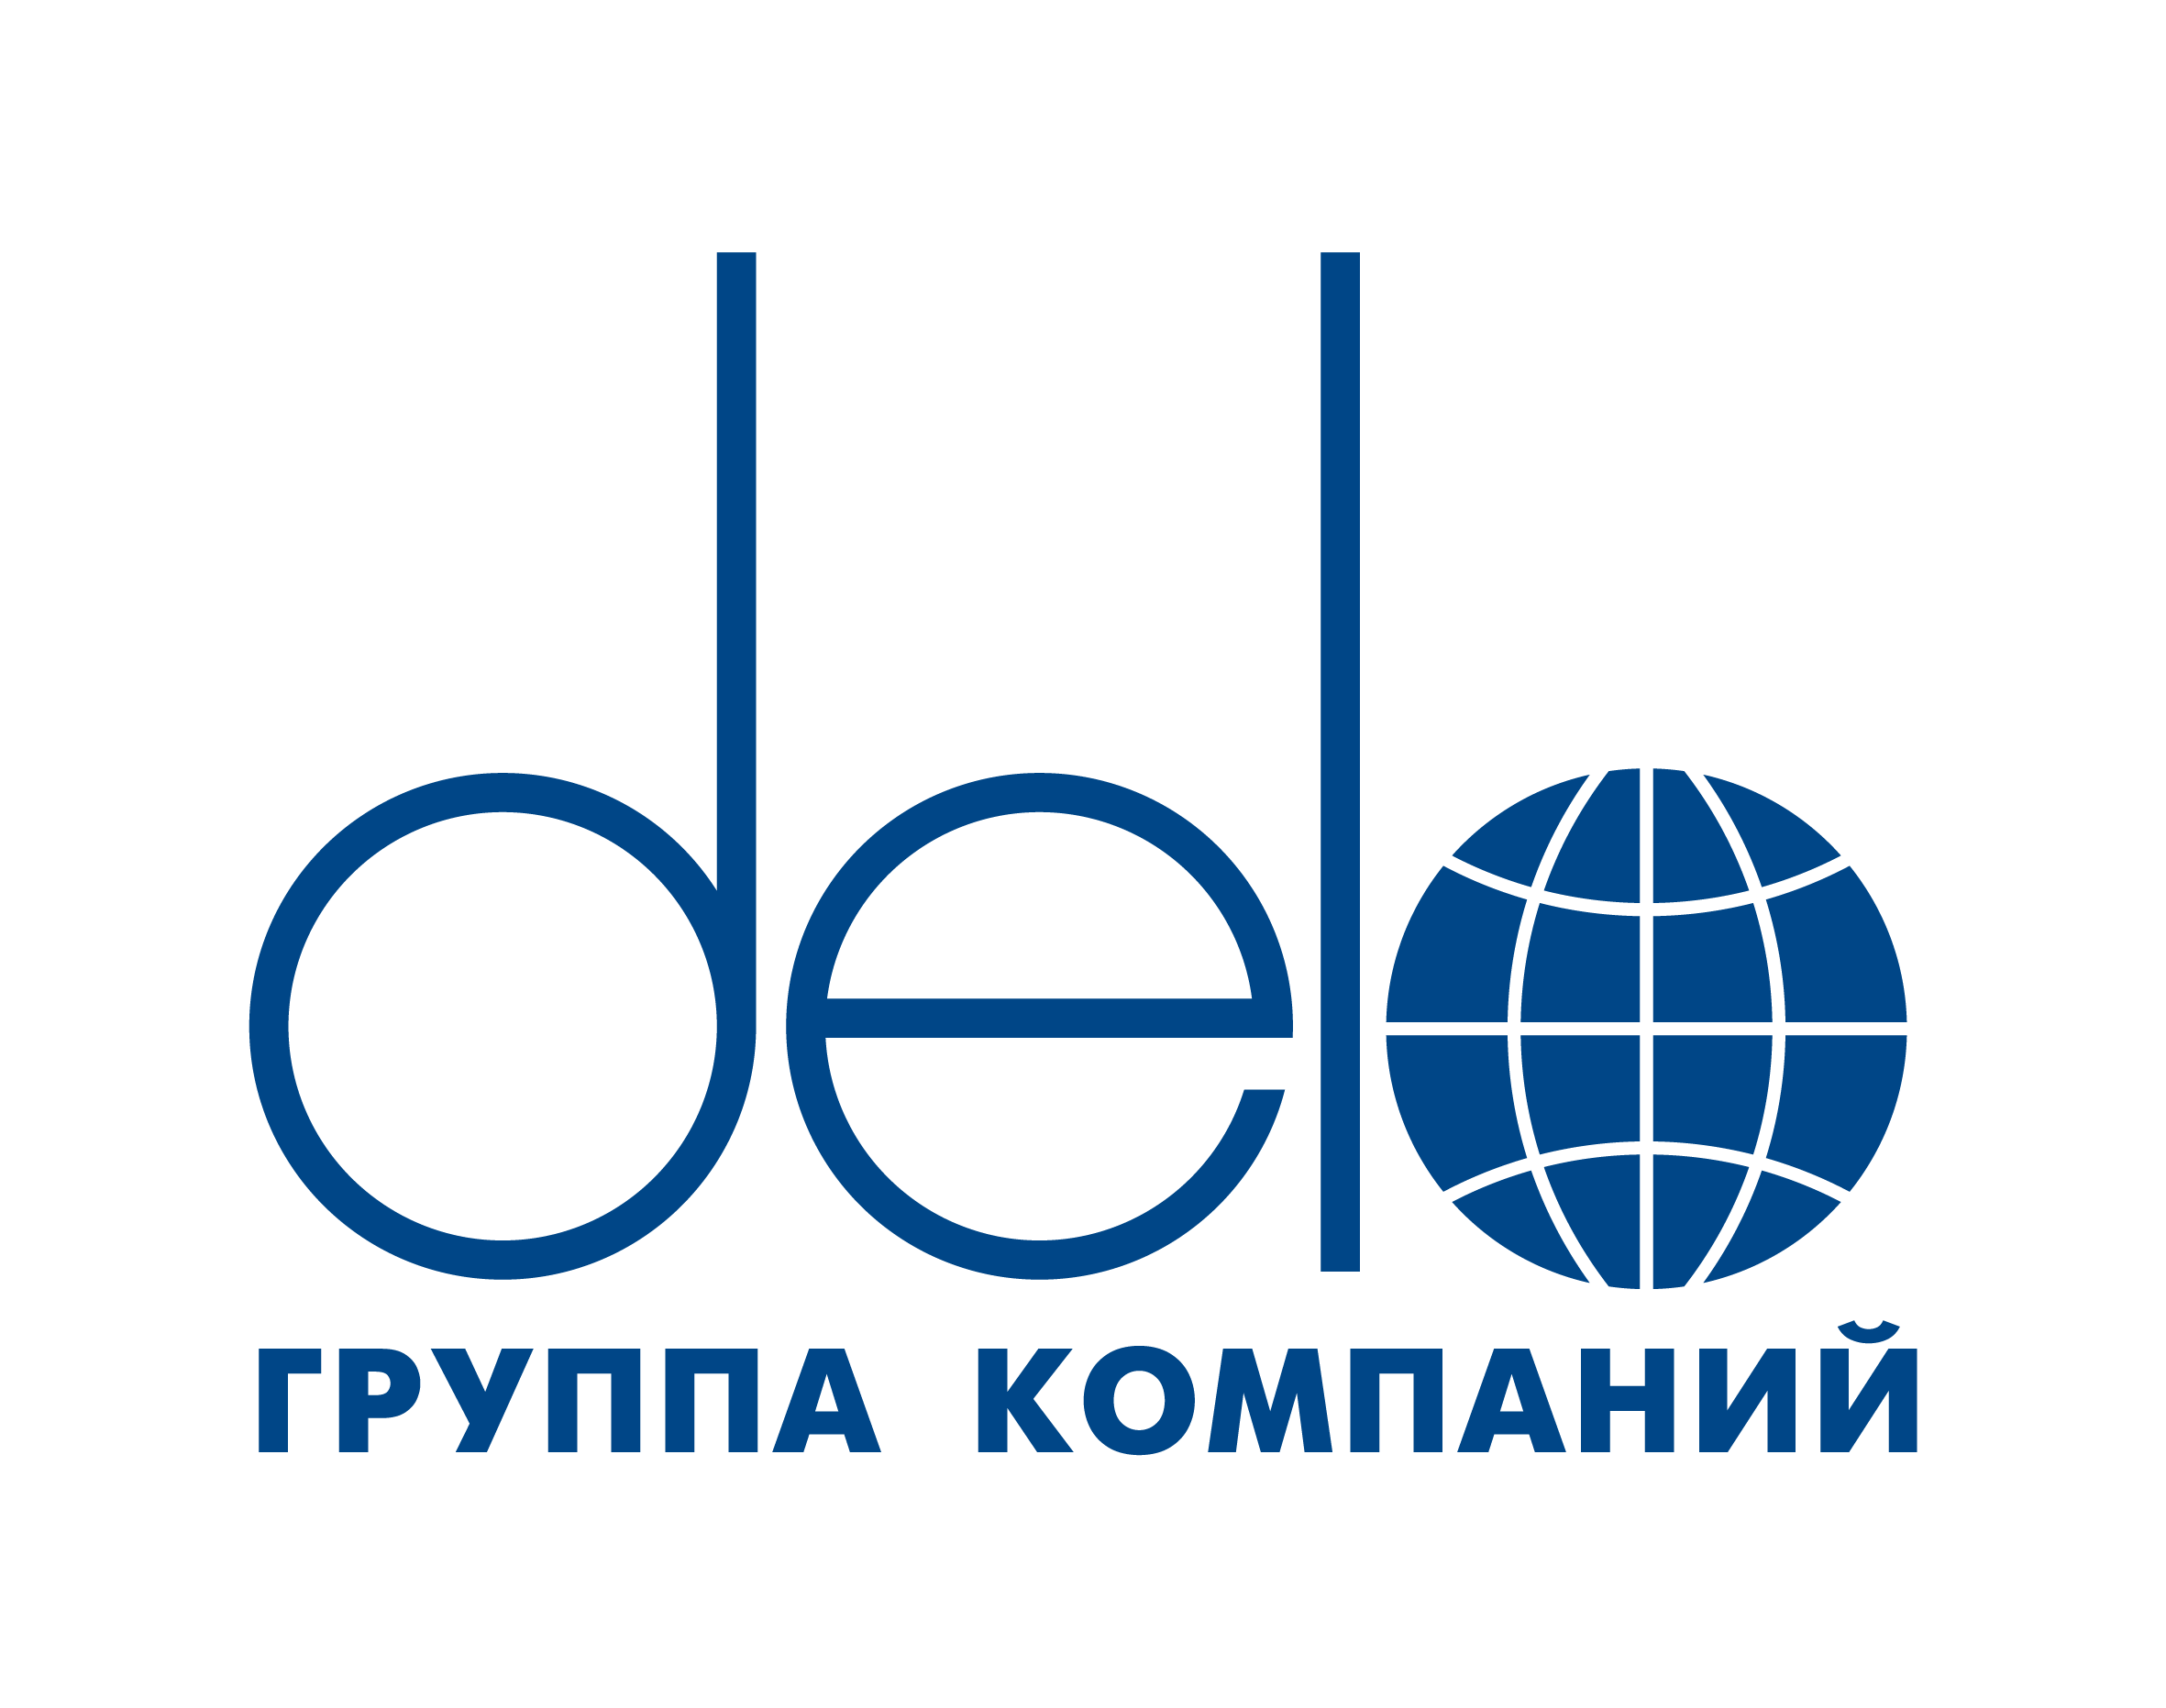 DELO_Group_logo_blue.png